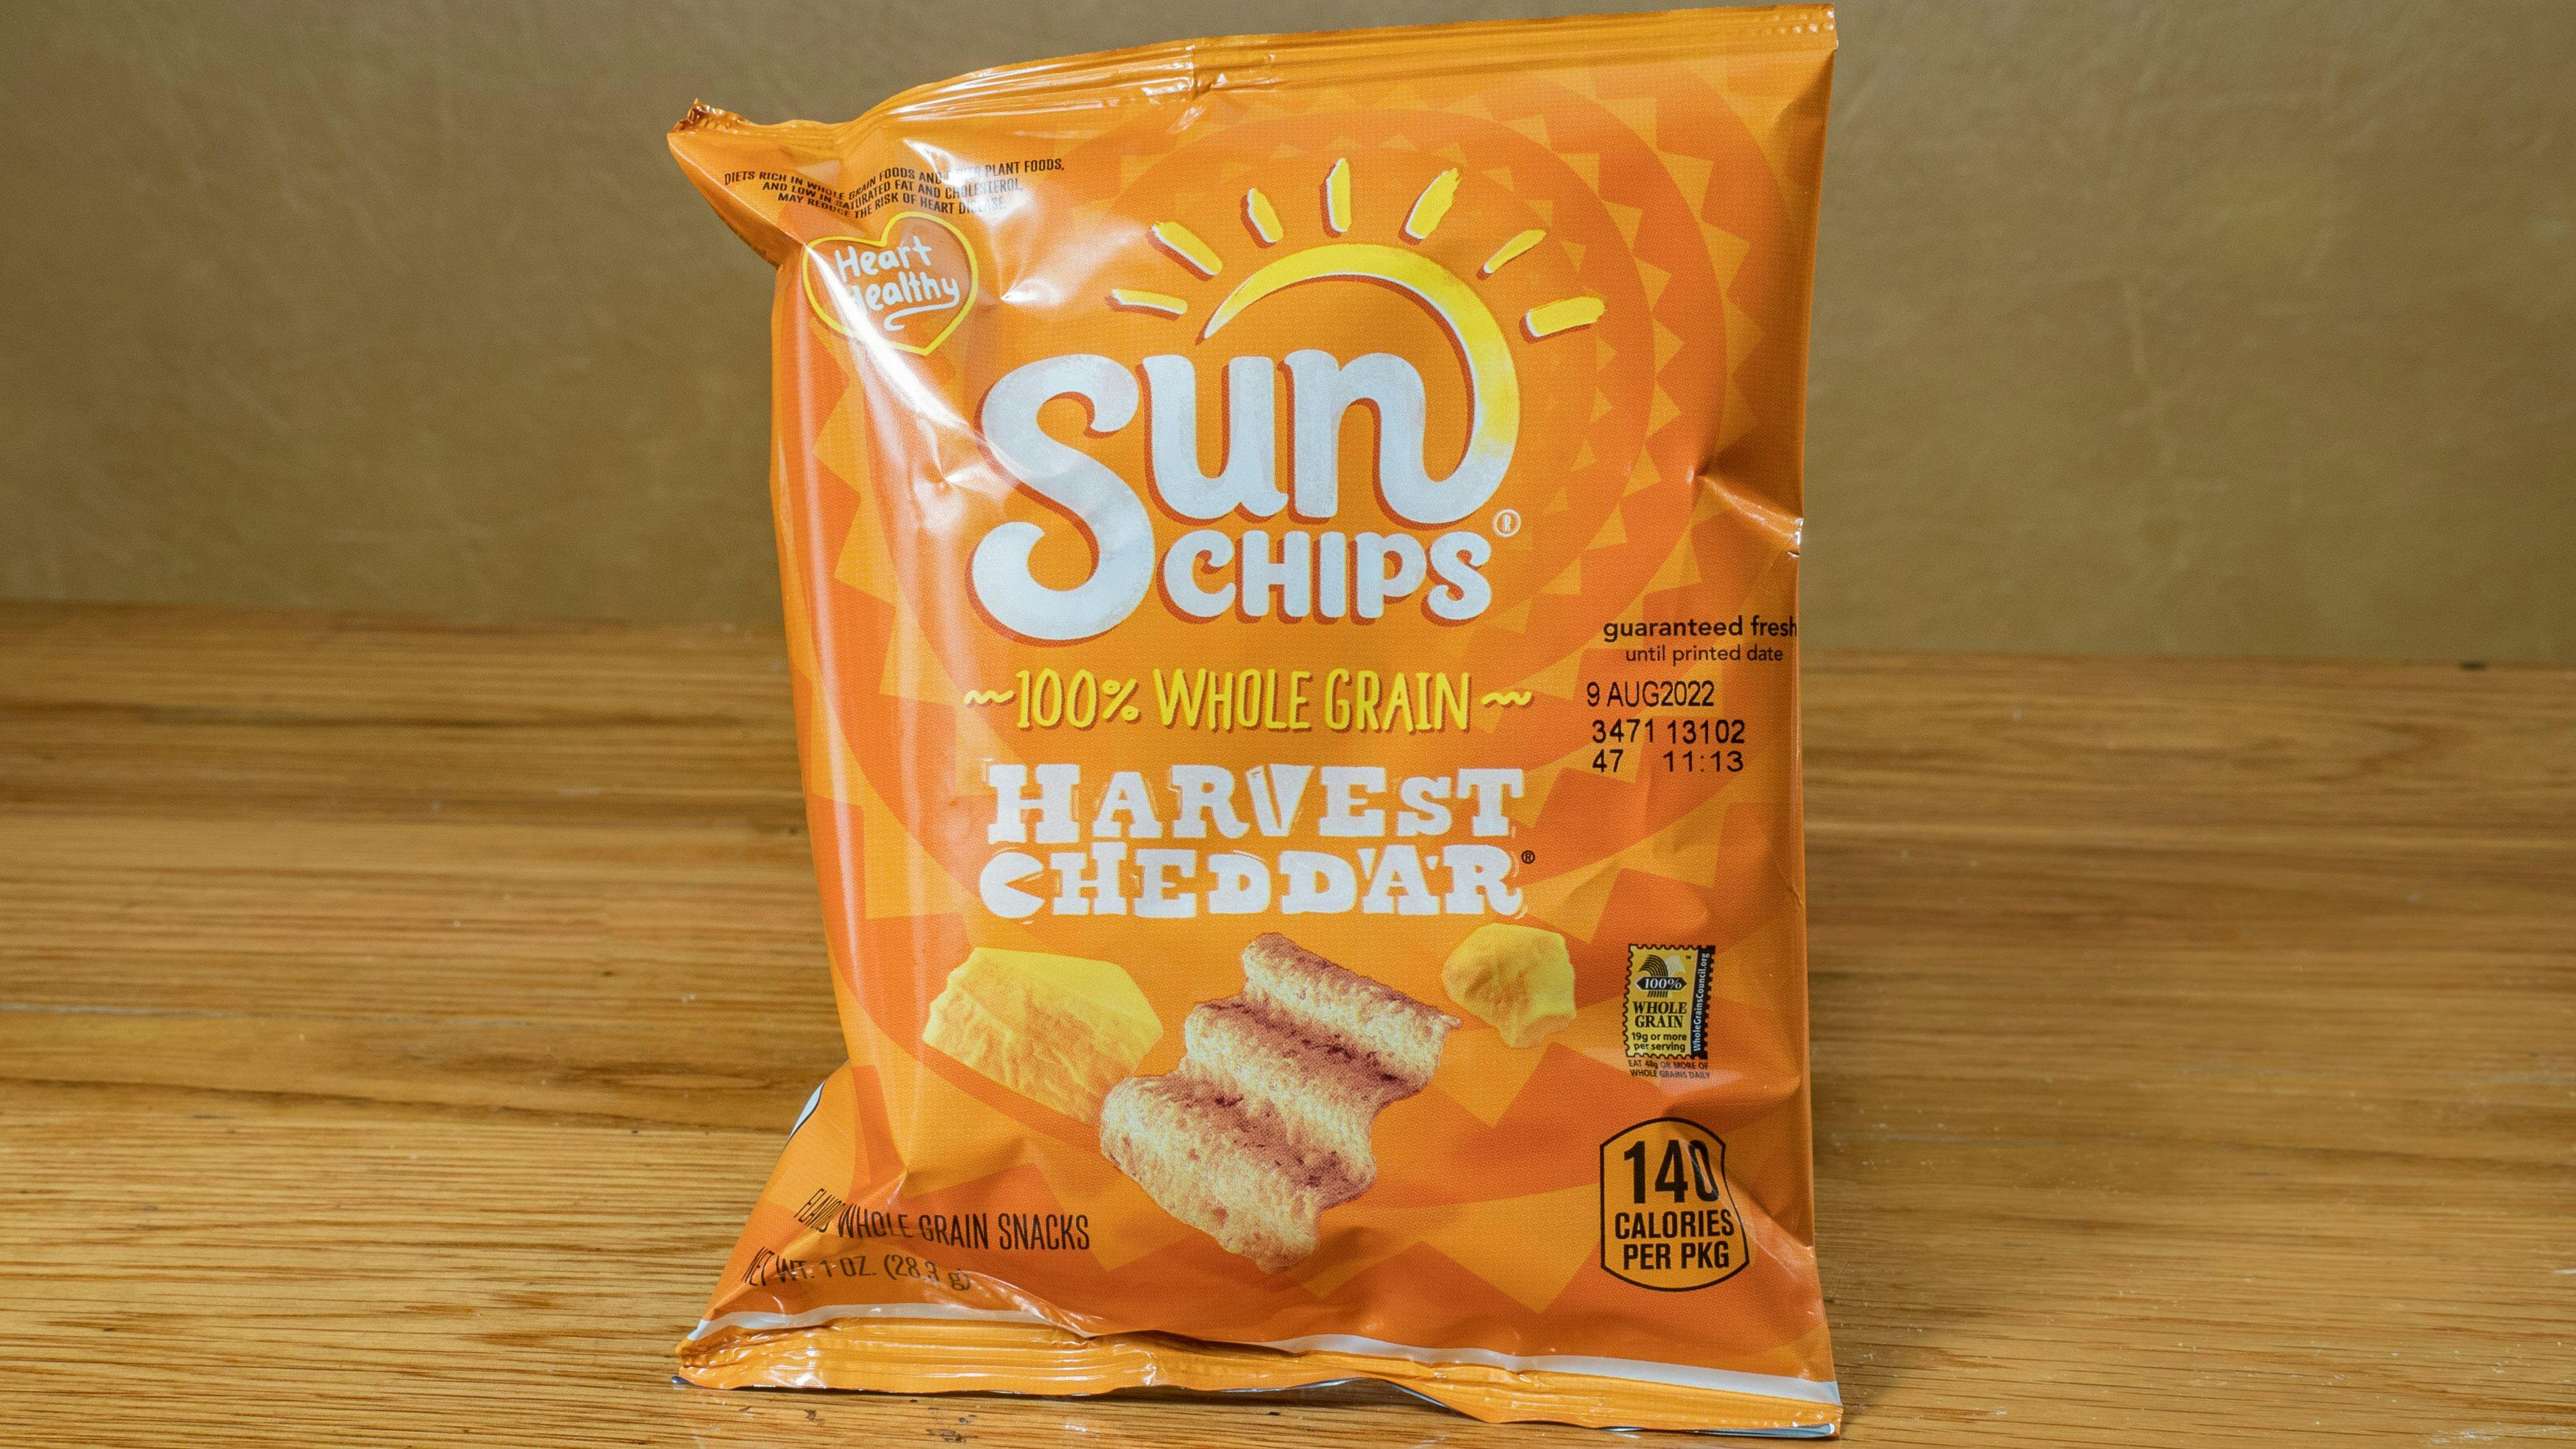 Bag of Chips from Austin Chicken Sandwich - Burnet Rd in Austin, TX